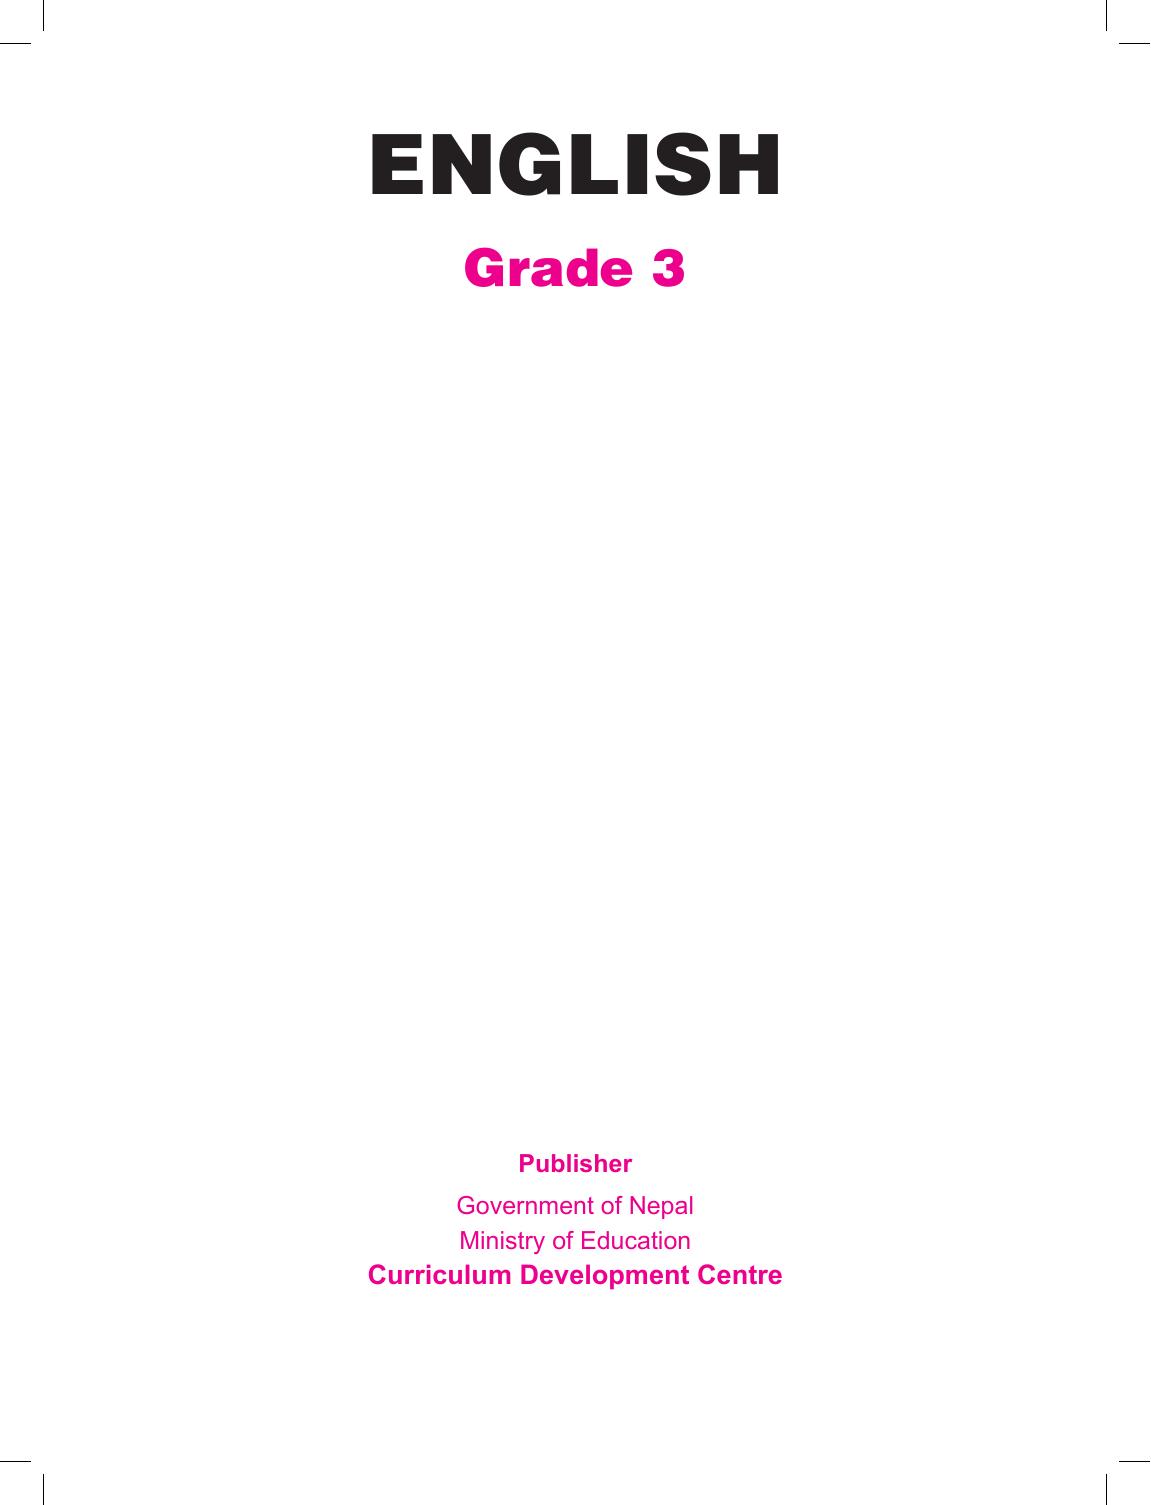 CDC 2017 - English Grade 3